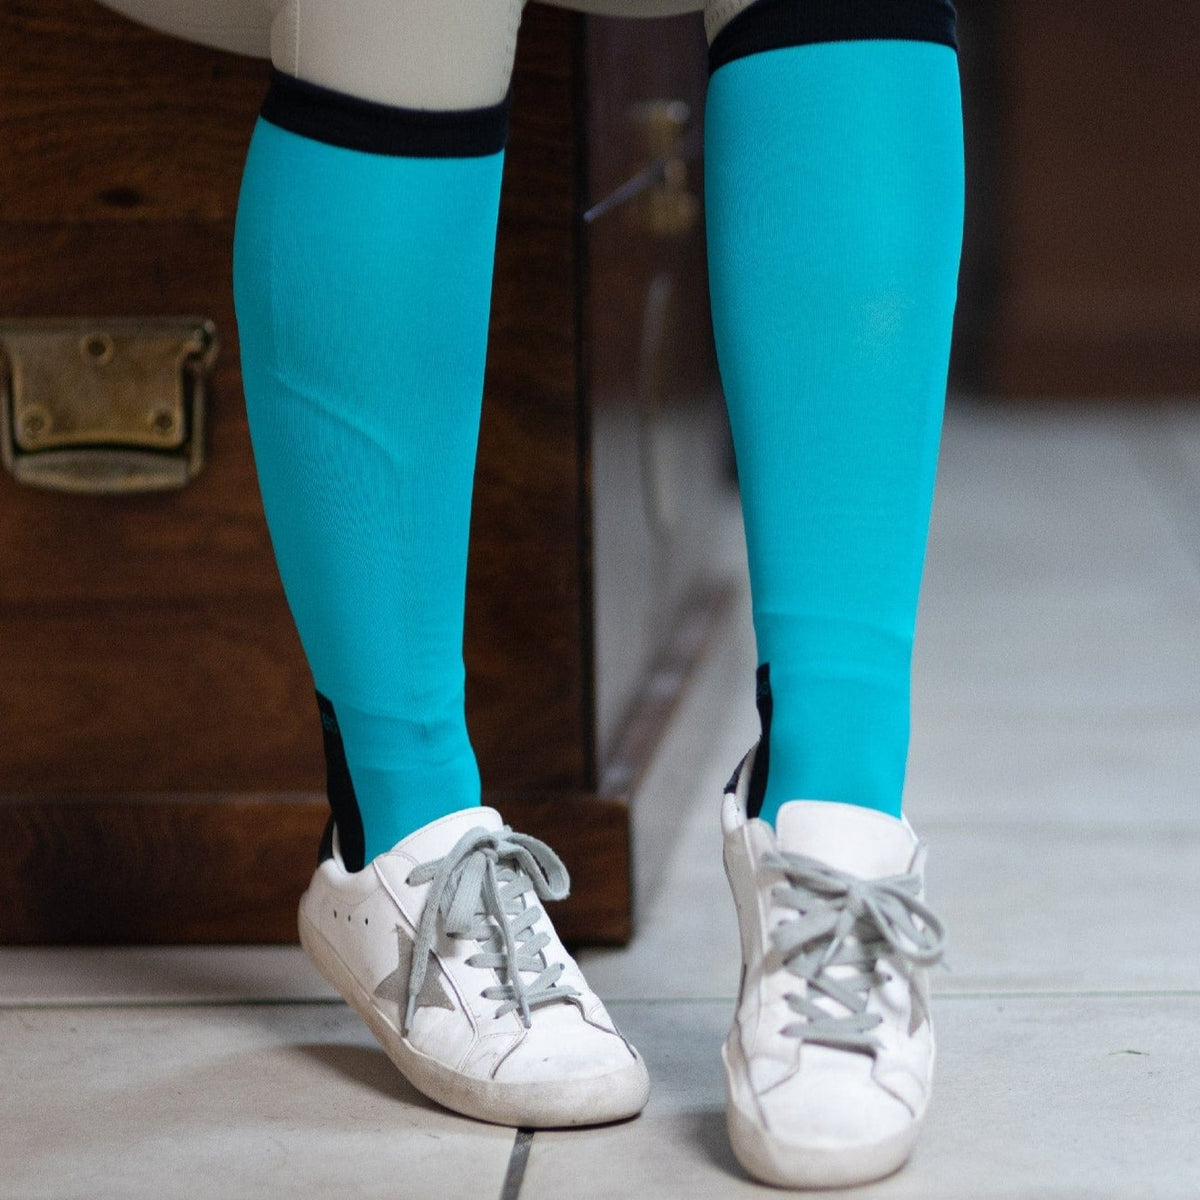 Stylish Blue Socks for Men - Richer Poorer Lookout Contemporary Socks